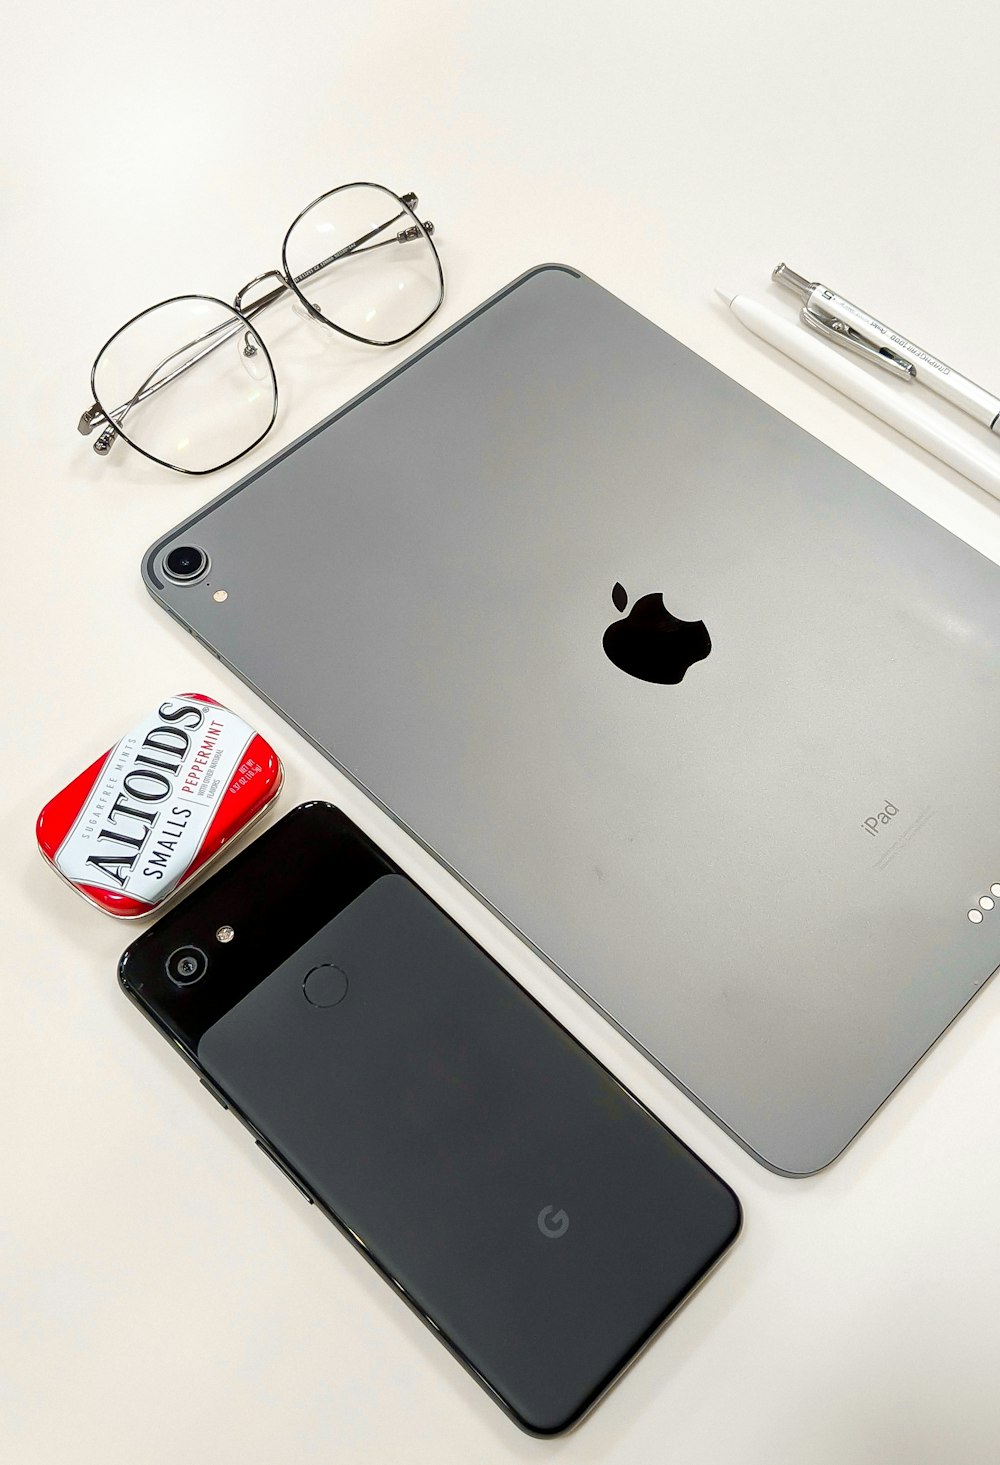 silver iphone 6 beside silver macbook